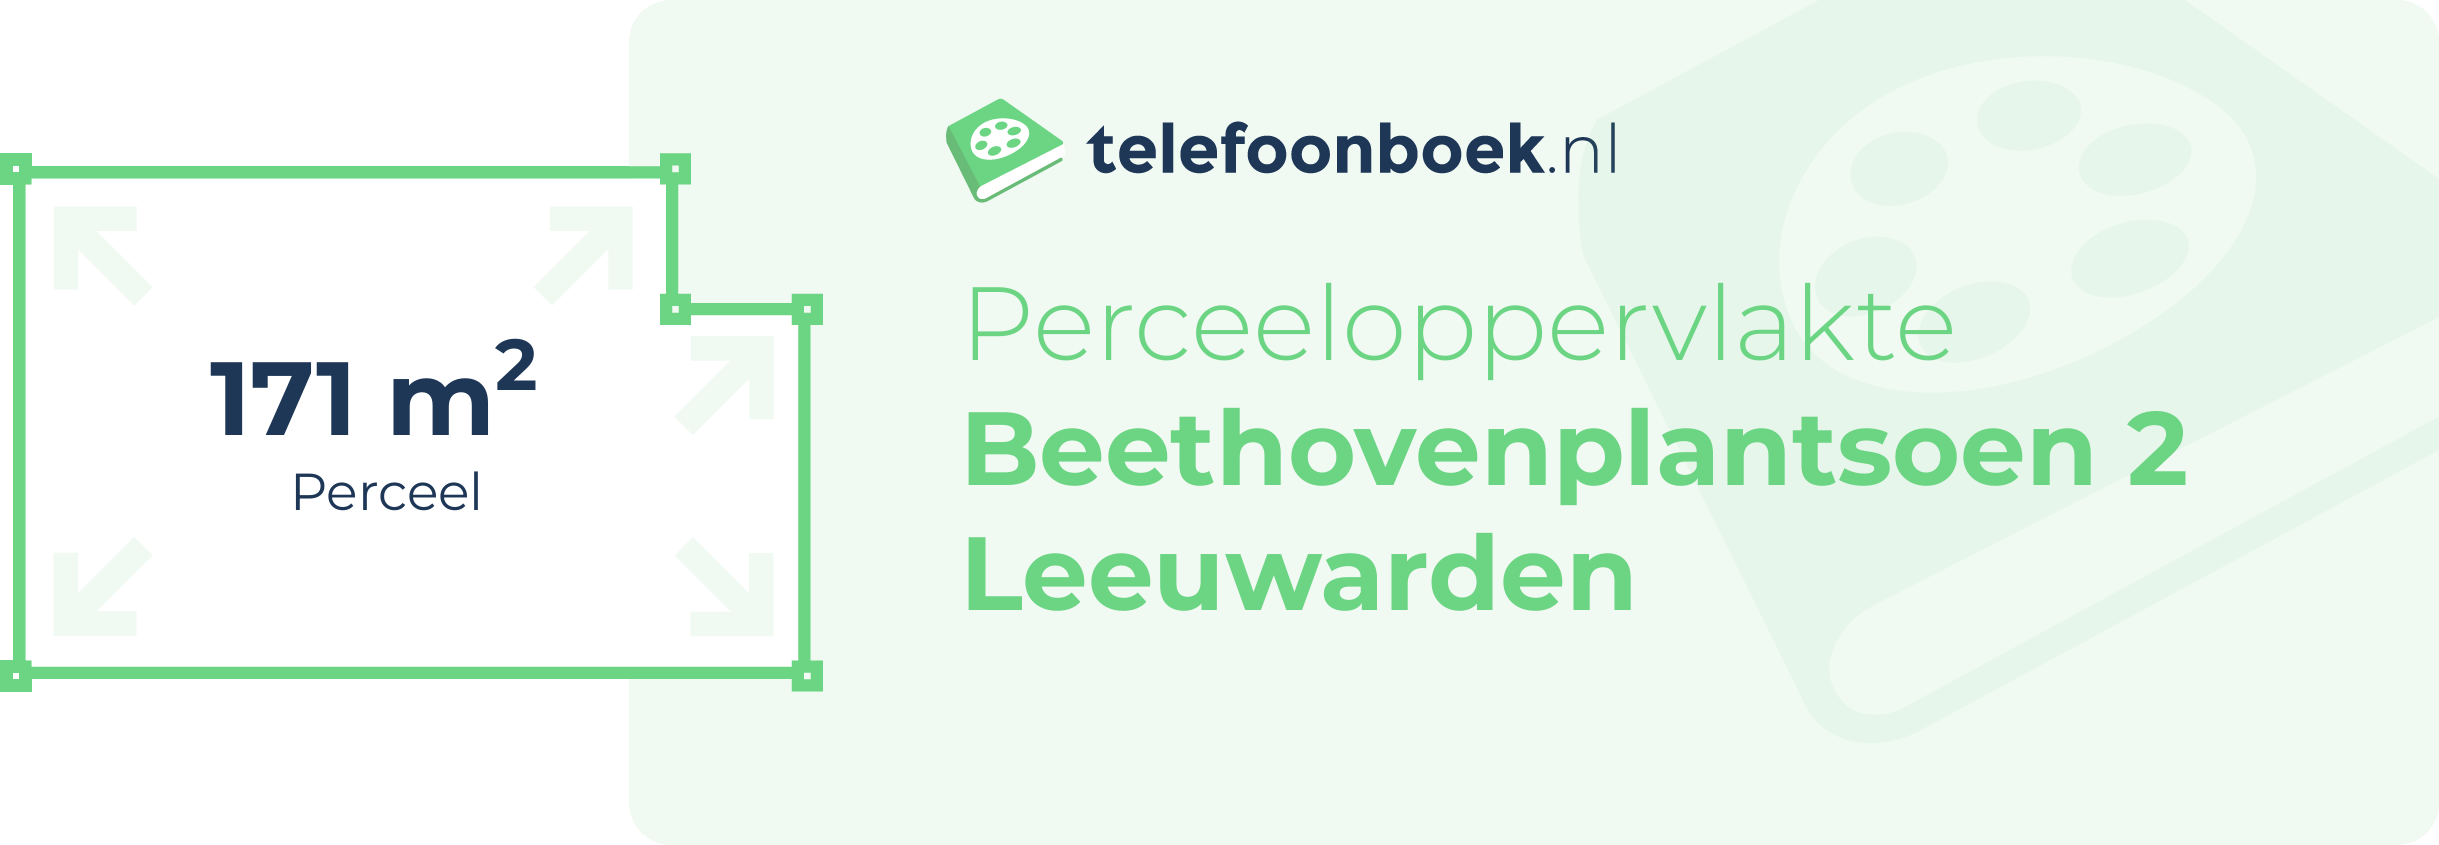 Perceeloppervlakte Beethovenplantsoen 2 Leeuwarden